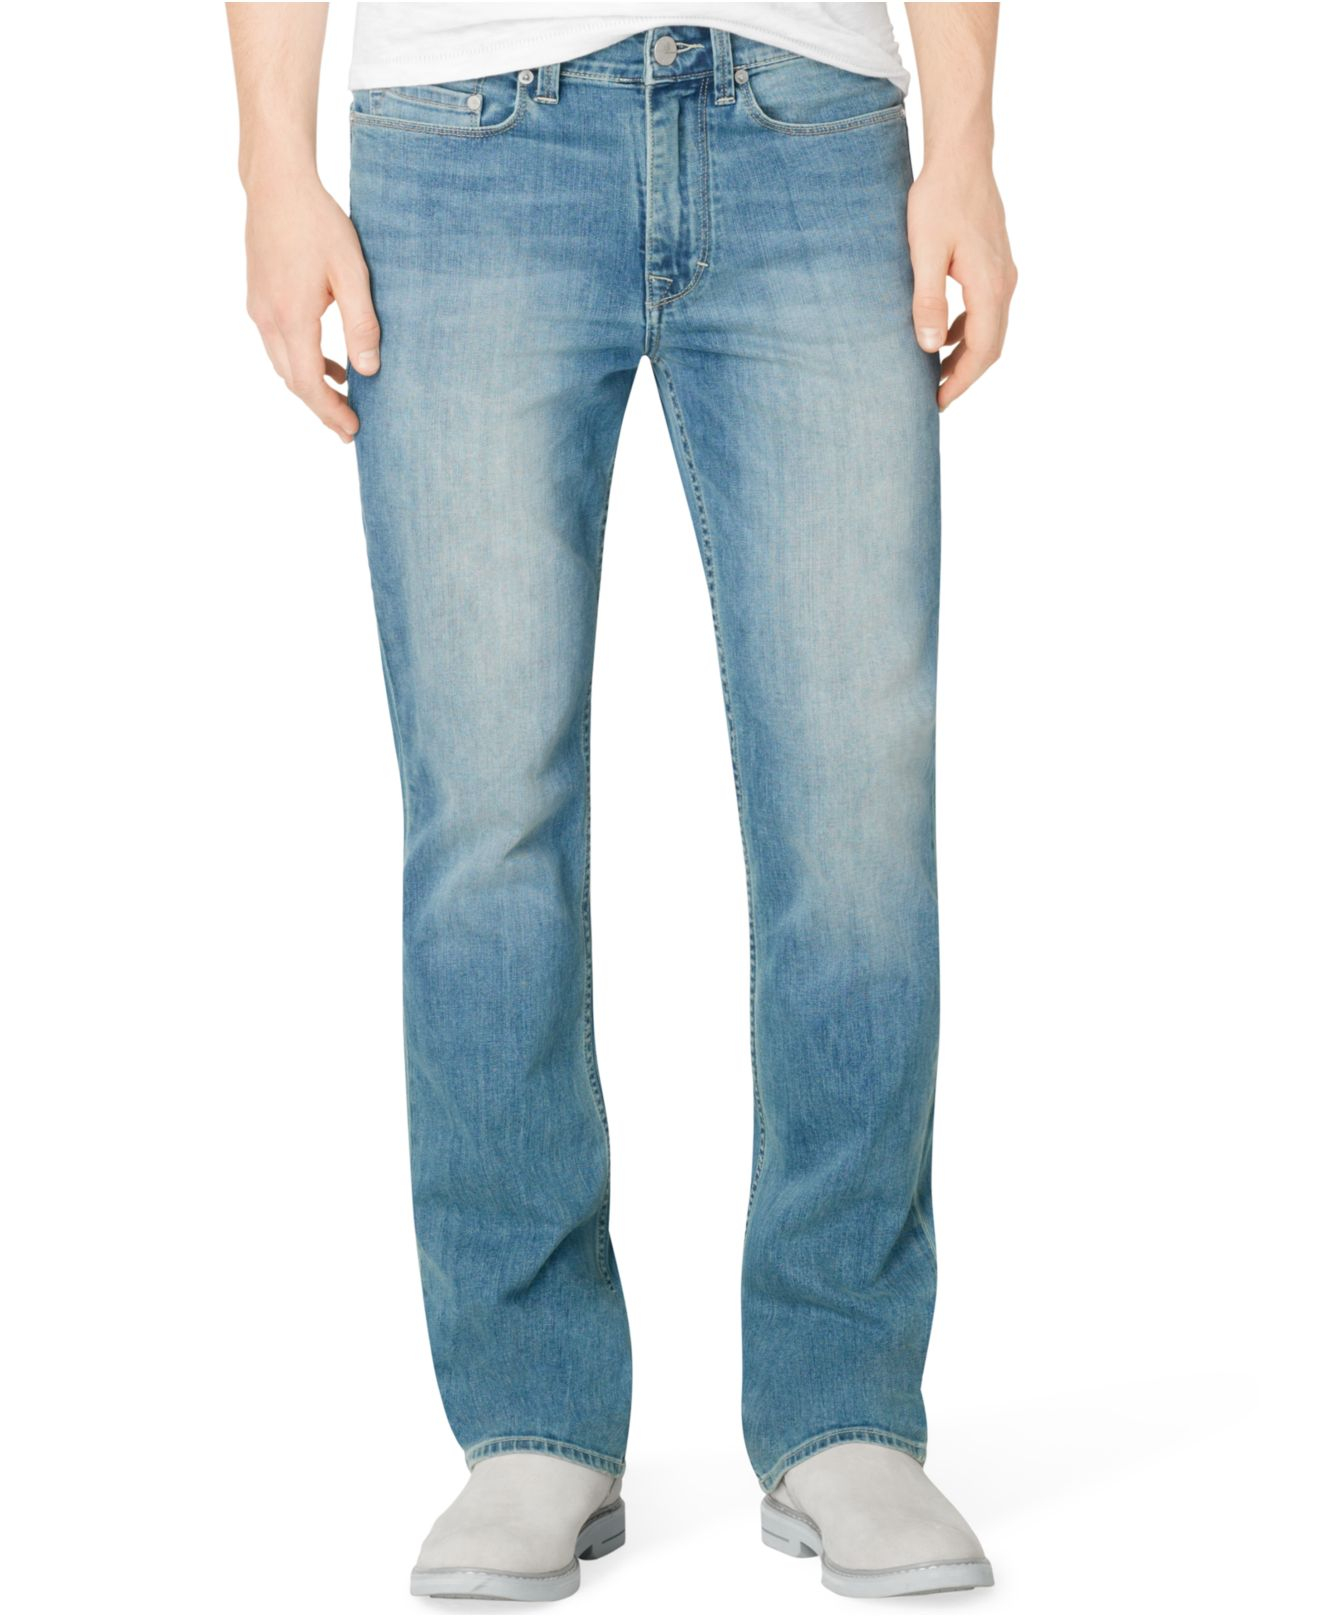 Calvin Klein Denim Bootcut Jeans in Metallic for Men - Lyst